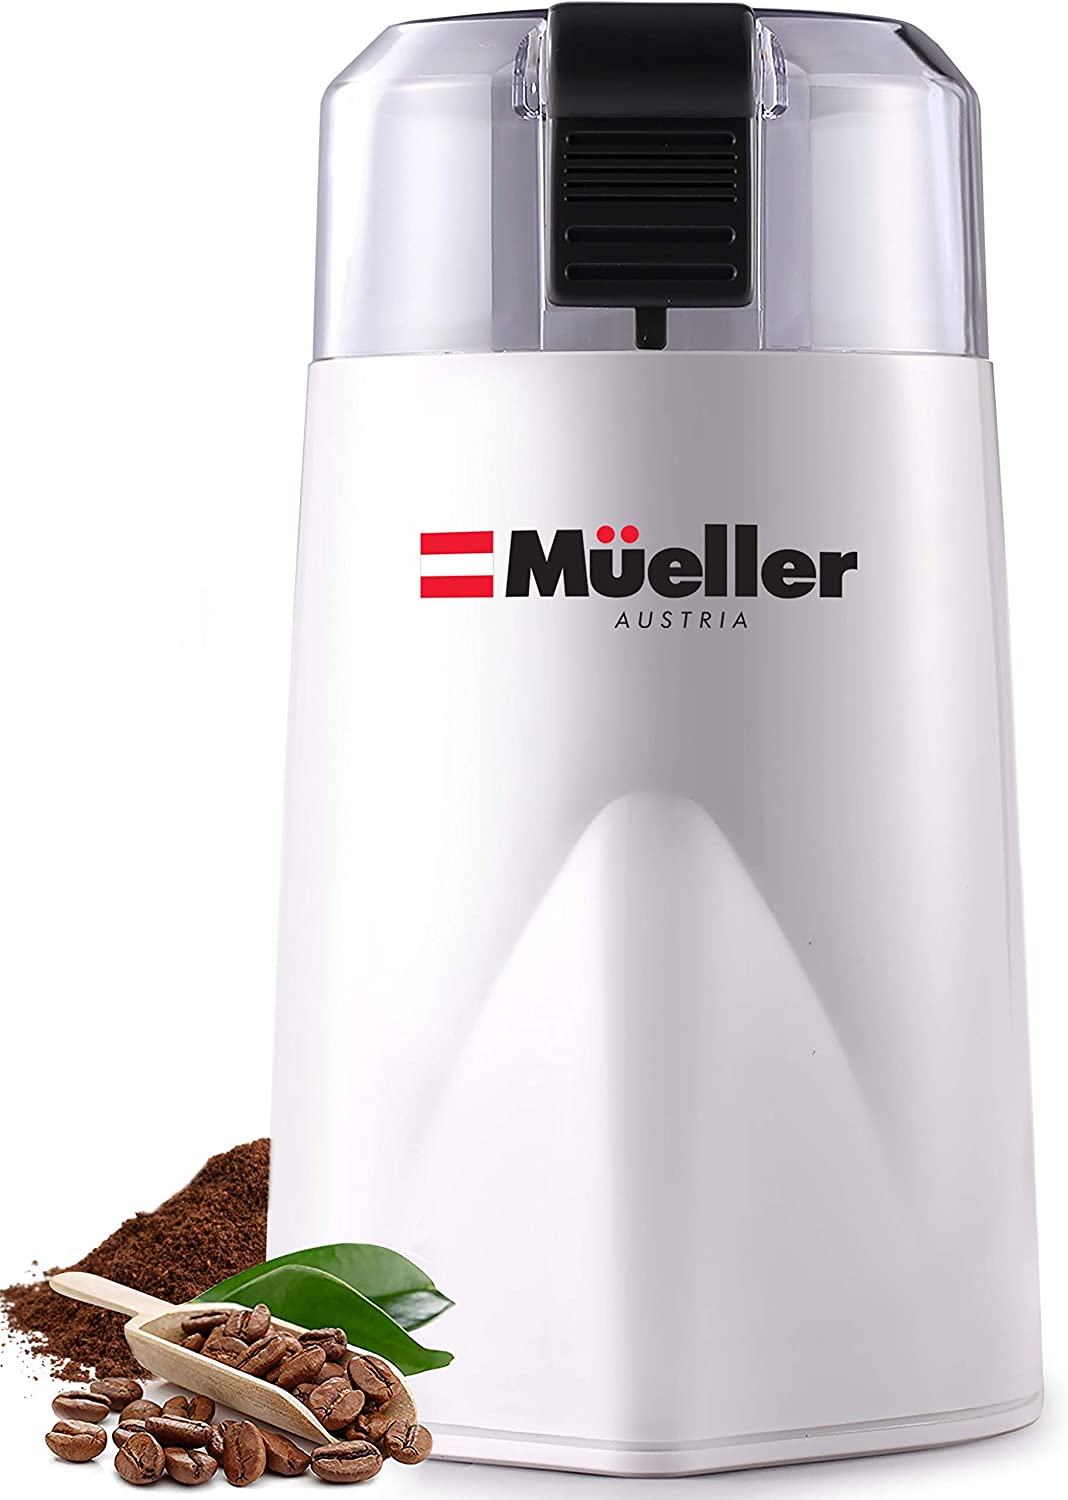 Mueller Austria HyperGrind Electric Coffee & Spice Grinder